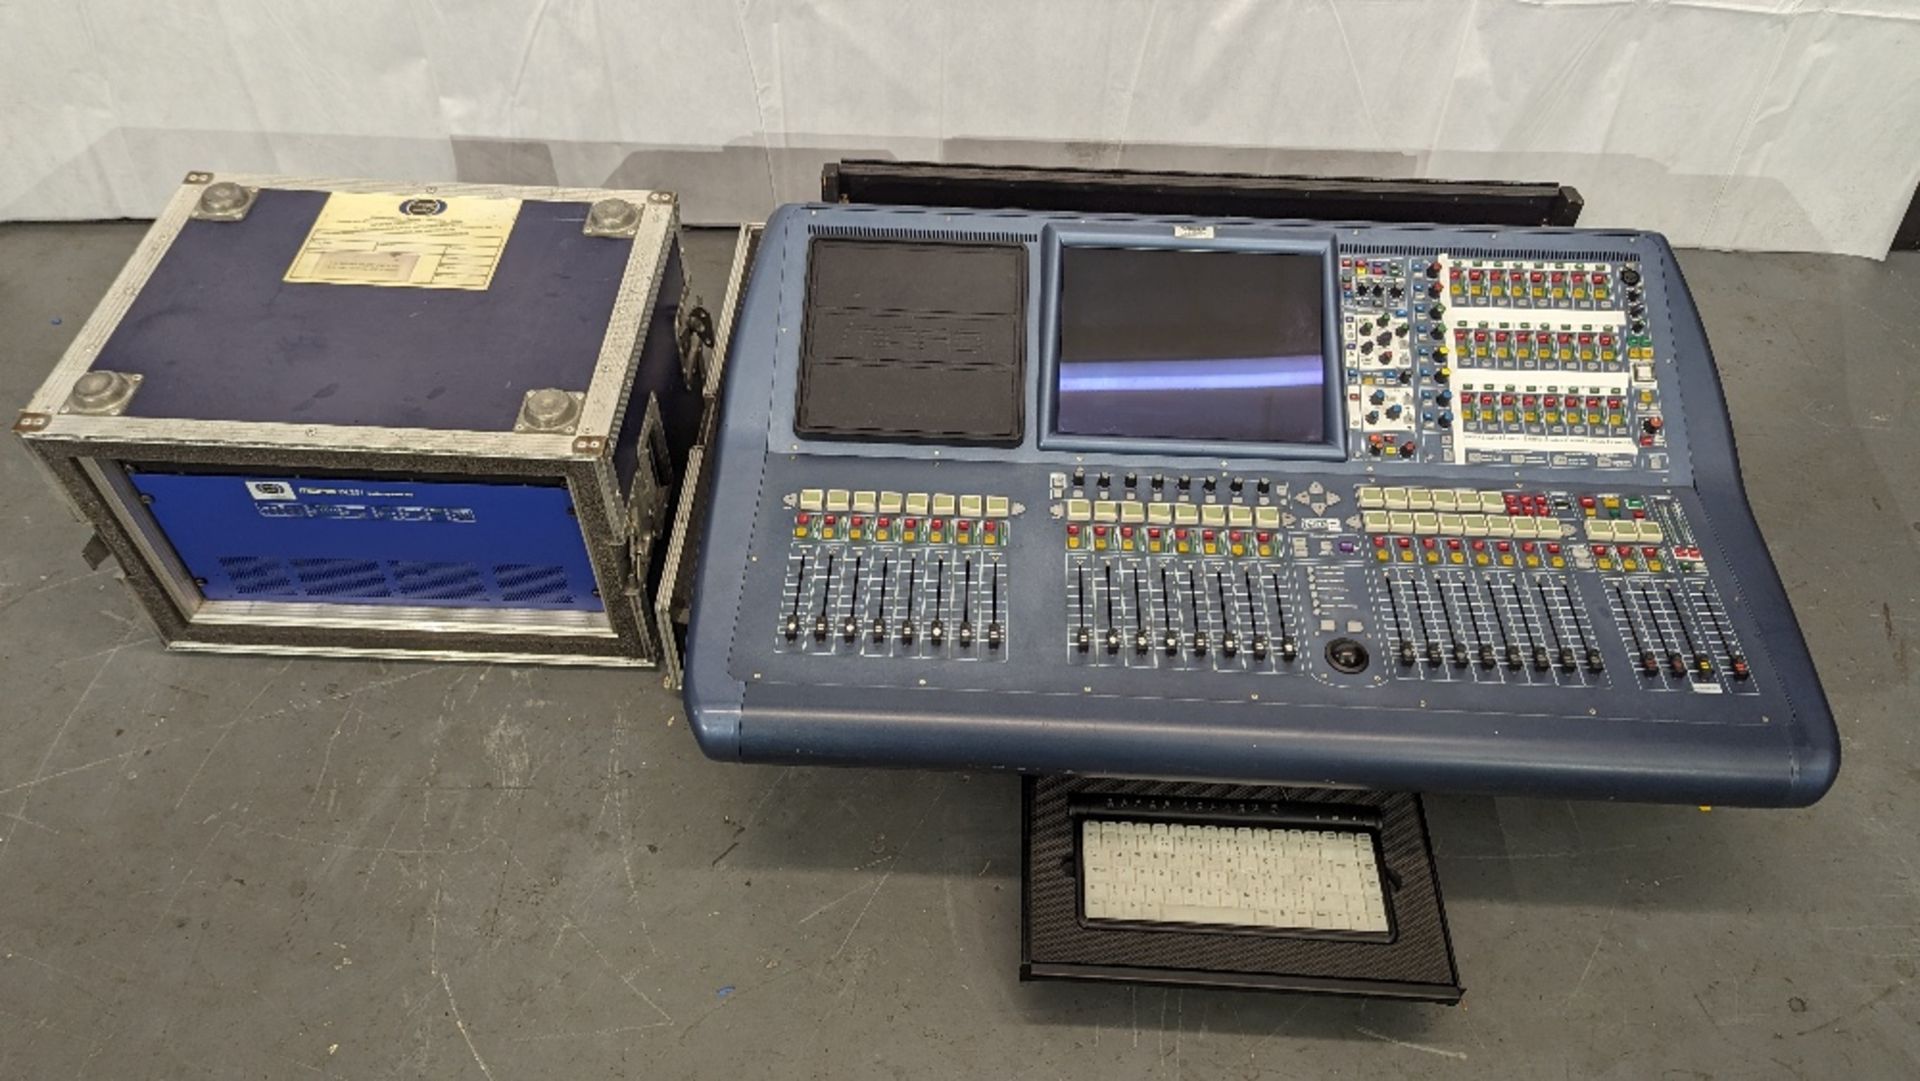 Midas Pro 2 Live Audio System Mixing Desk Console & Midas DL251 Digital Stage Box